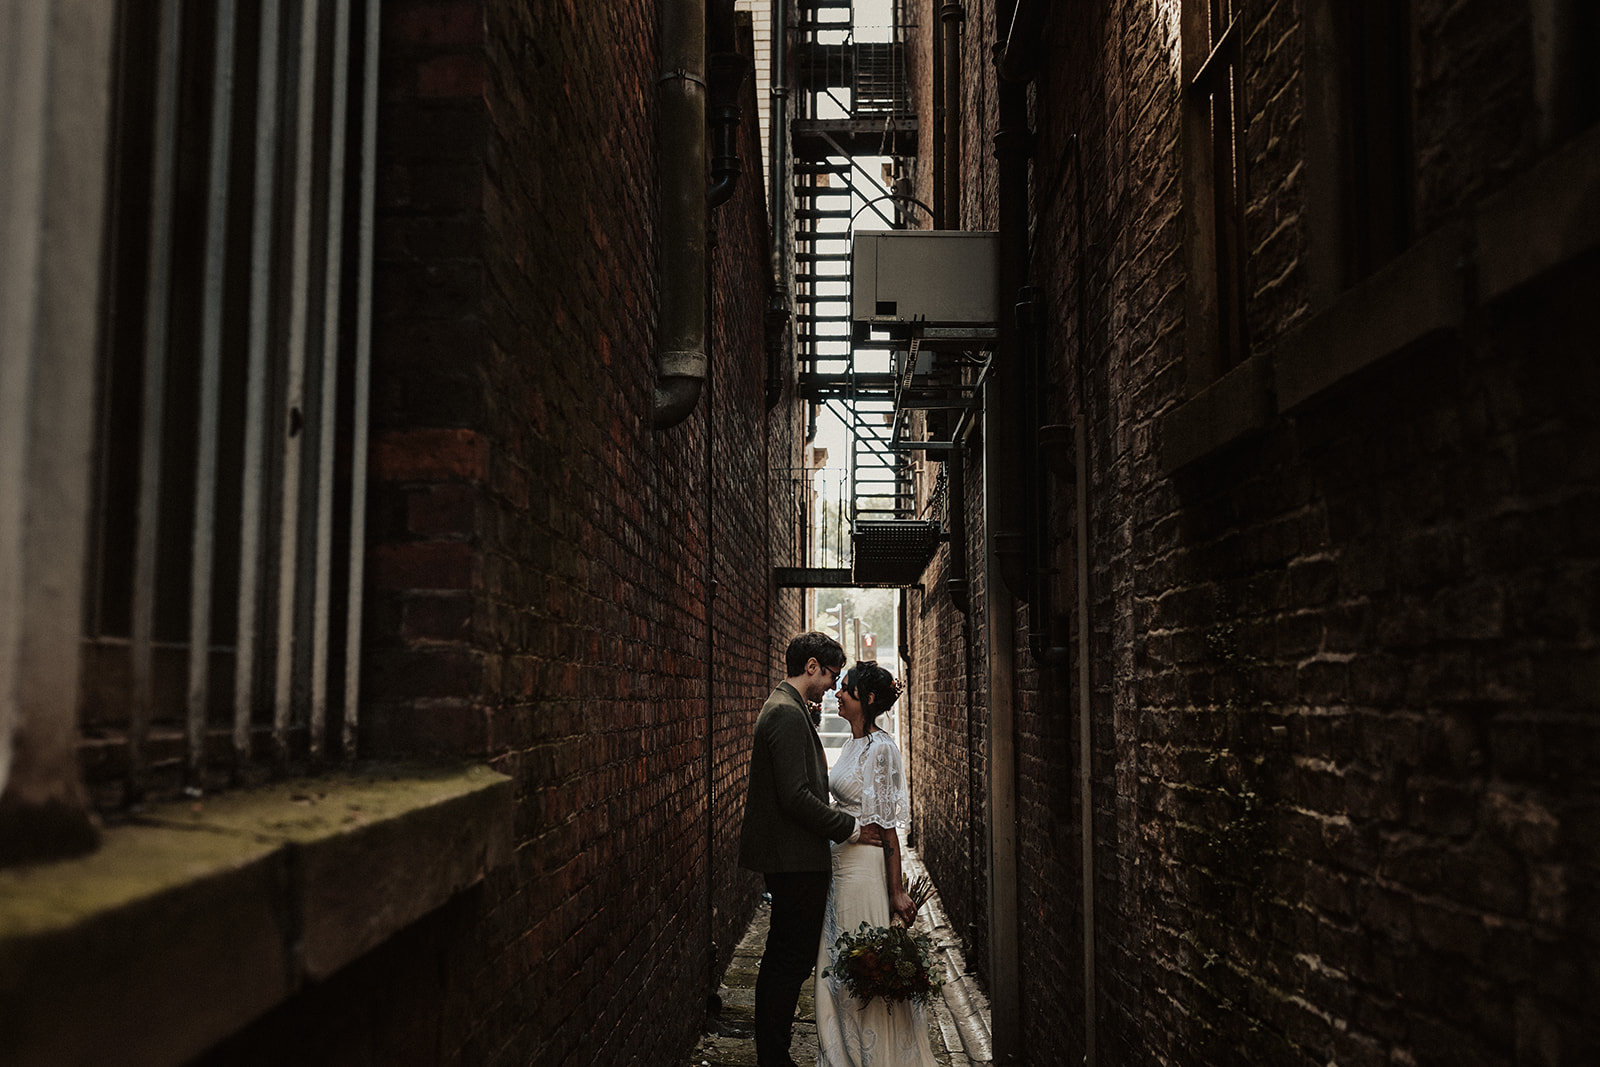 An intimate wedding in Newcastle upon Tyne